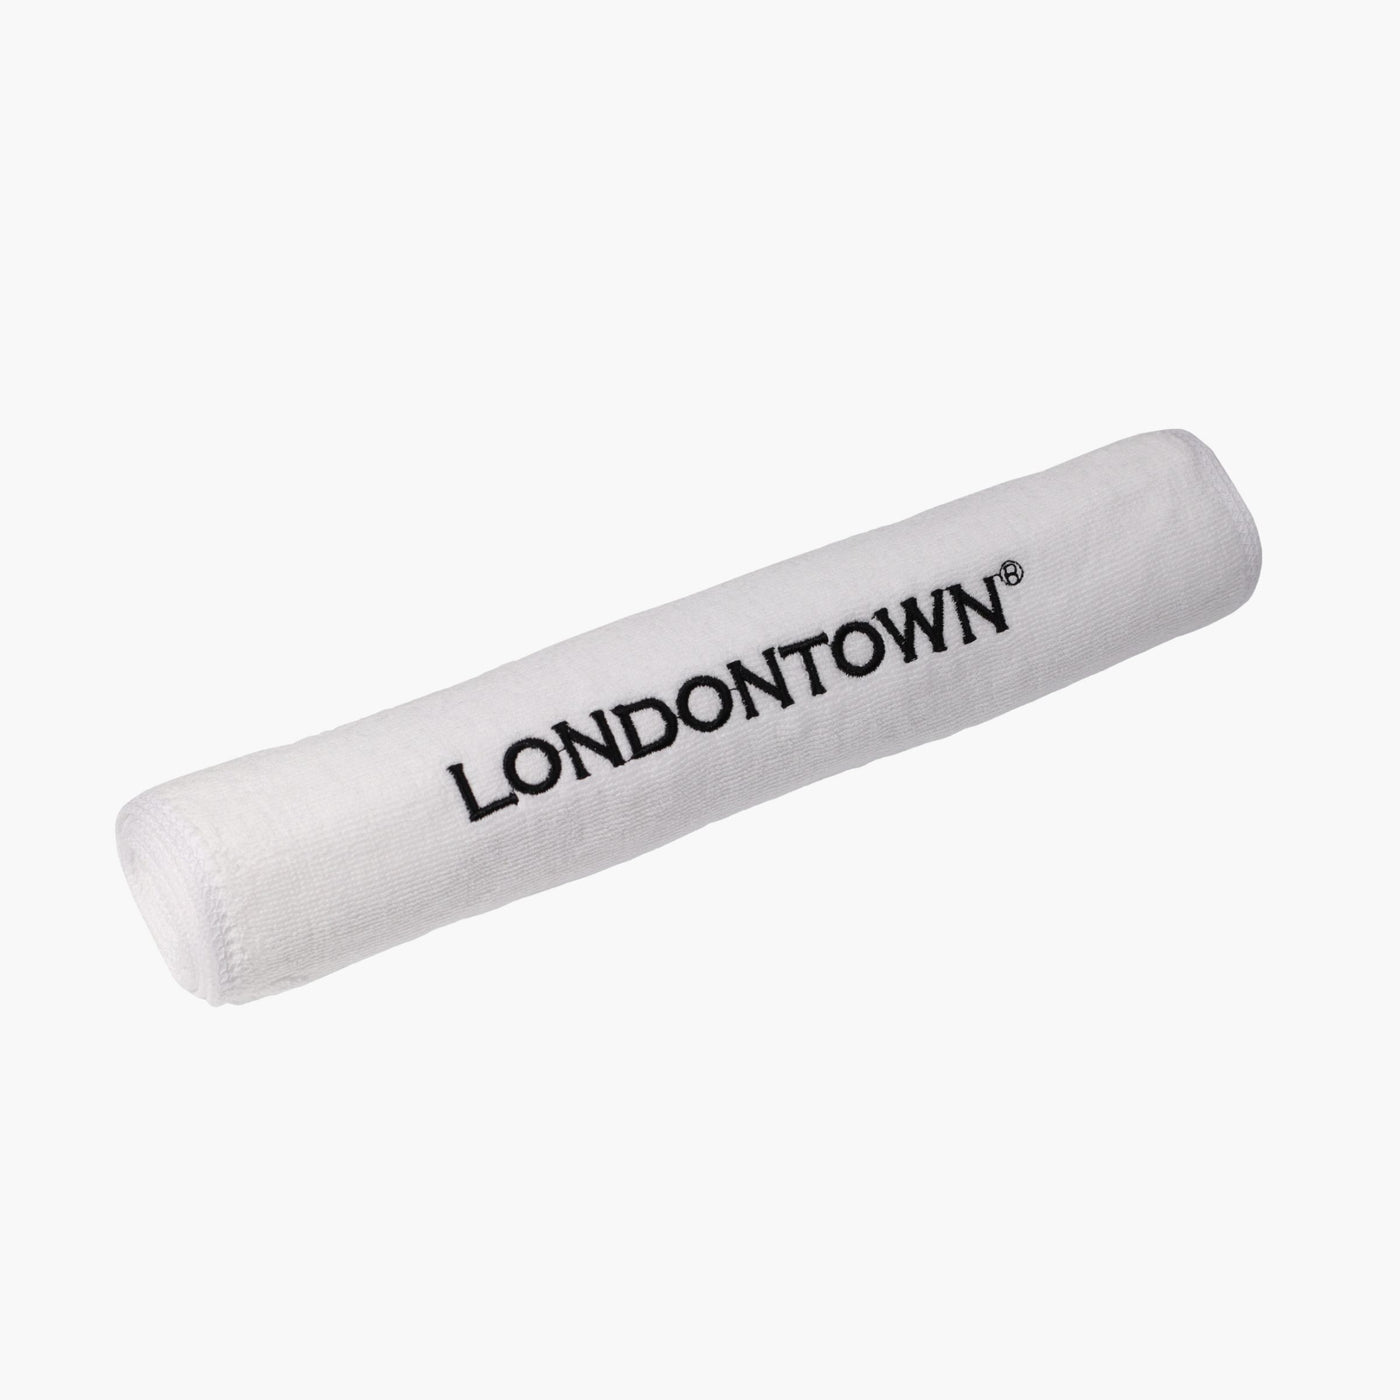 Londontown Towel